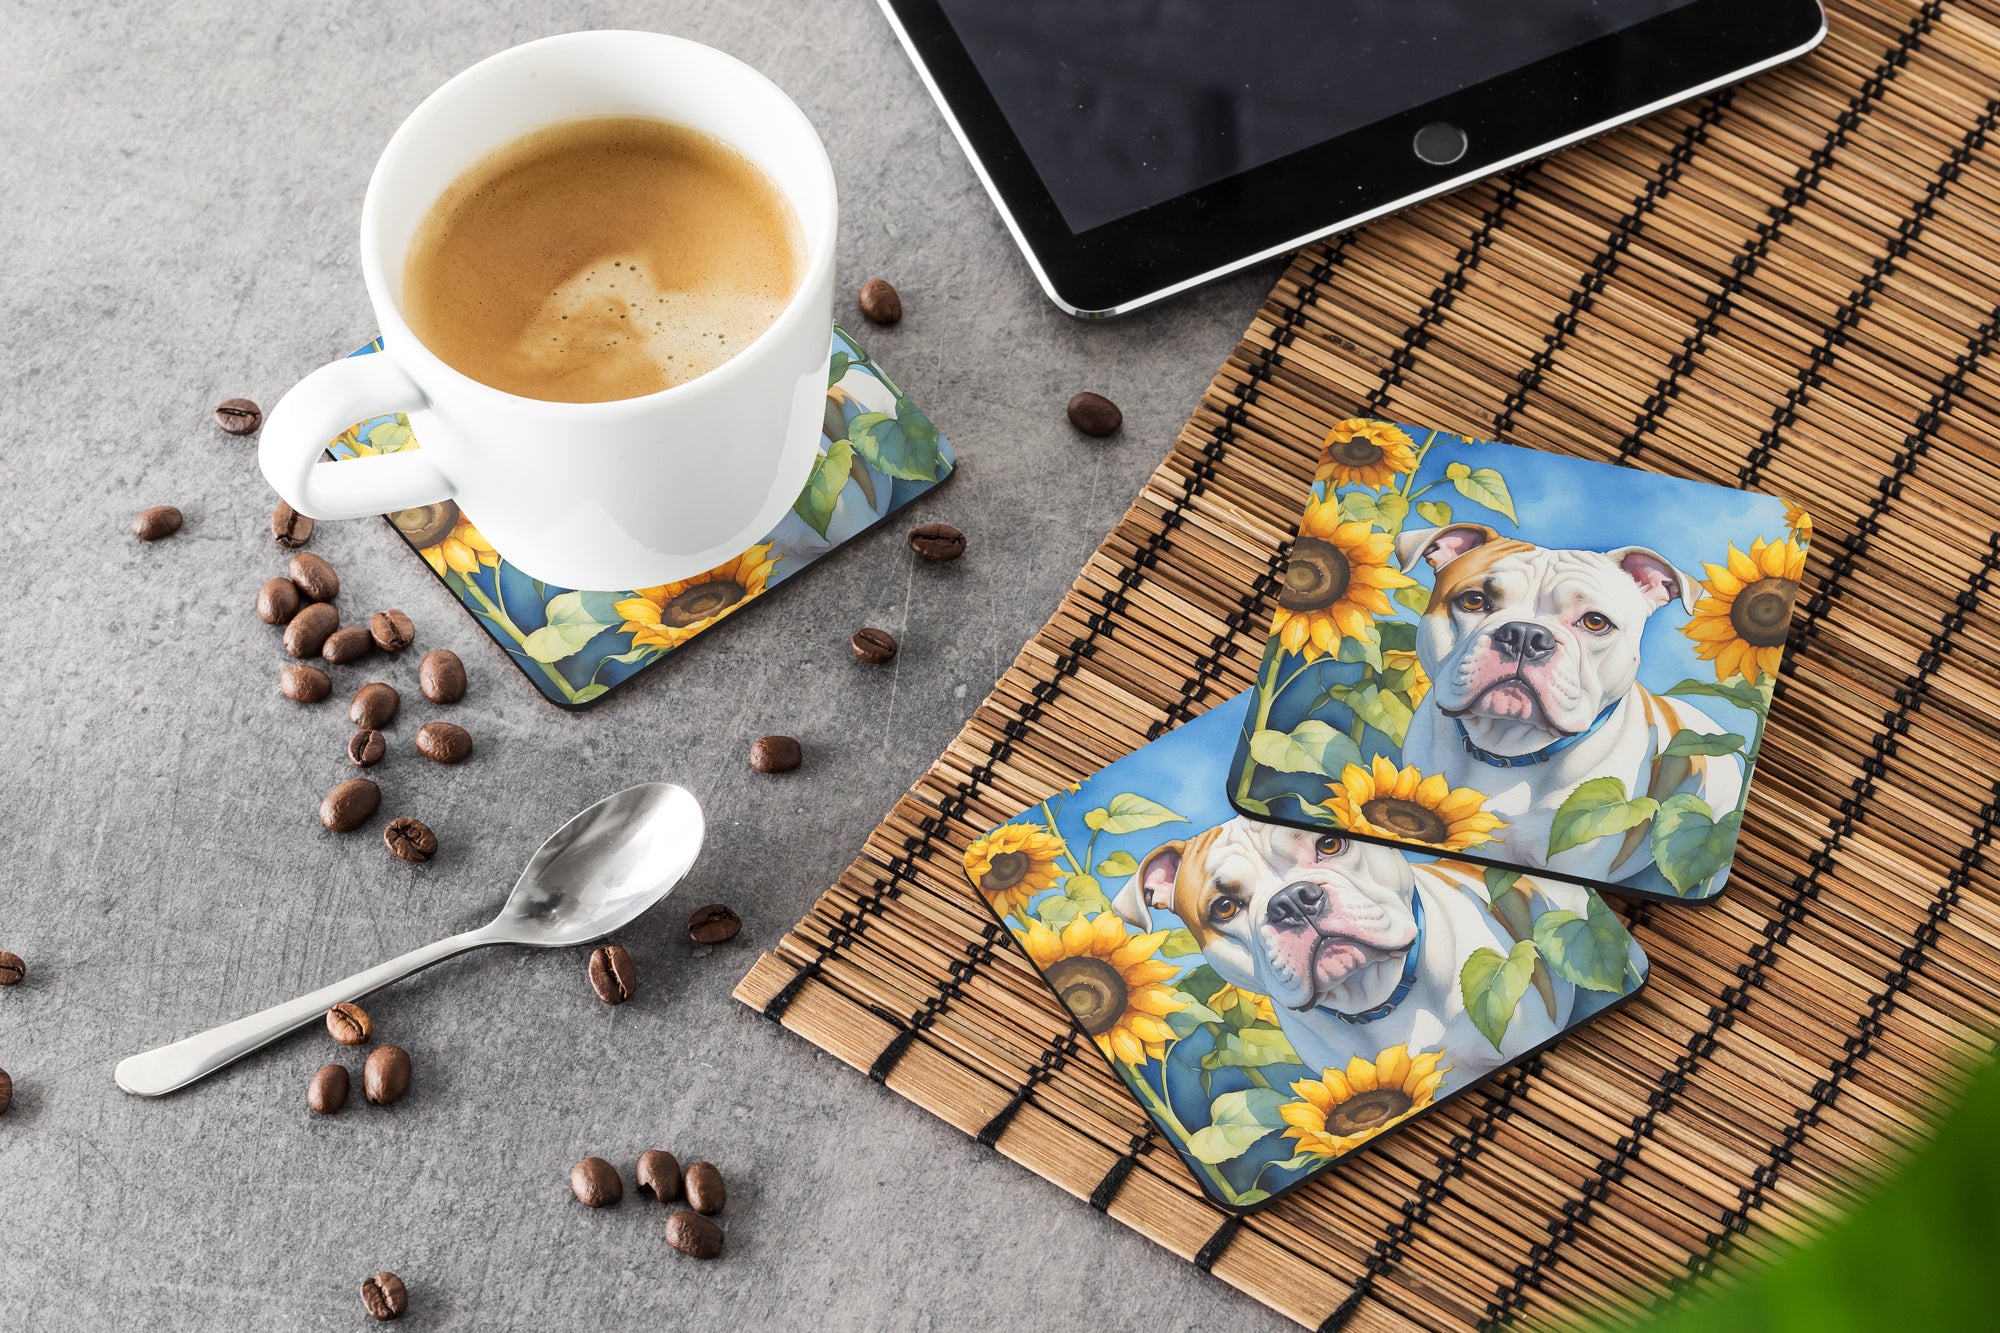 American Bulldog in Sunflowers Foam Coasters